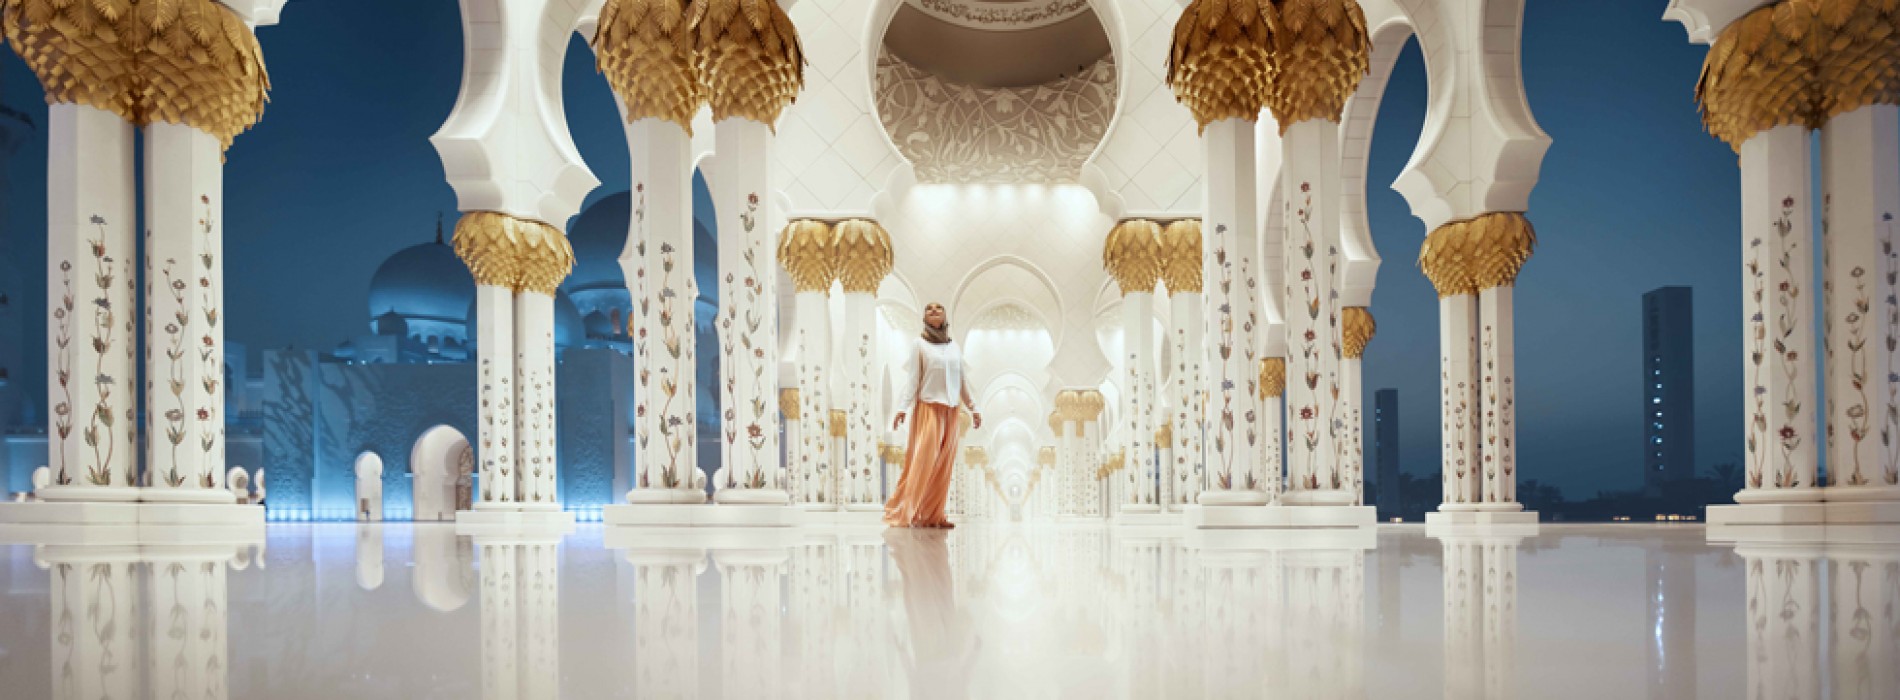 TCA Abu Dhabi launches new global destination campaign